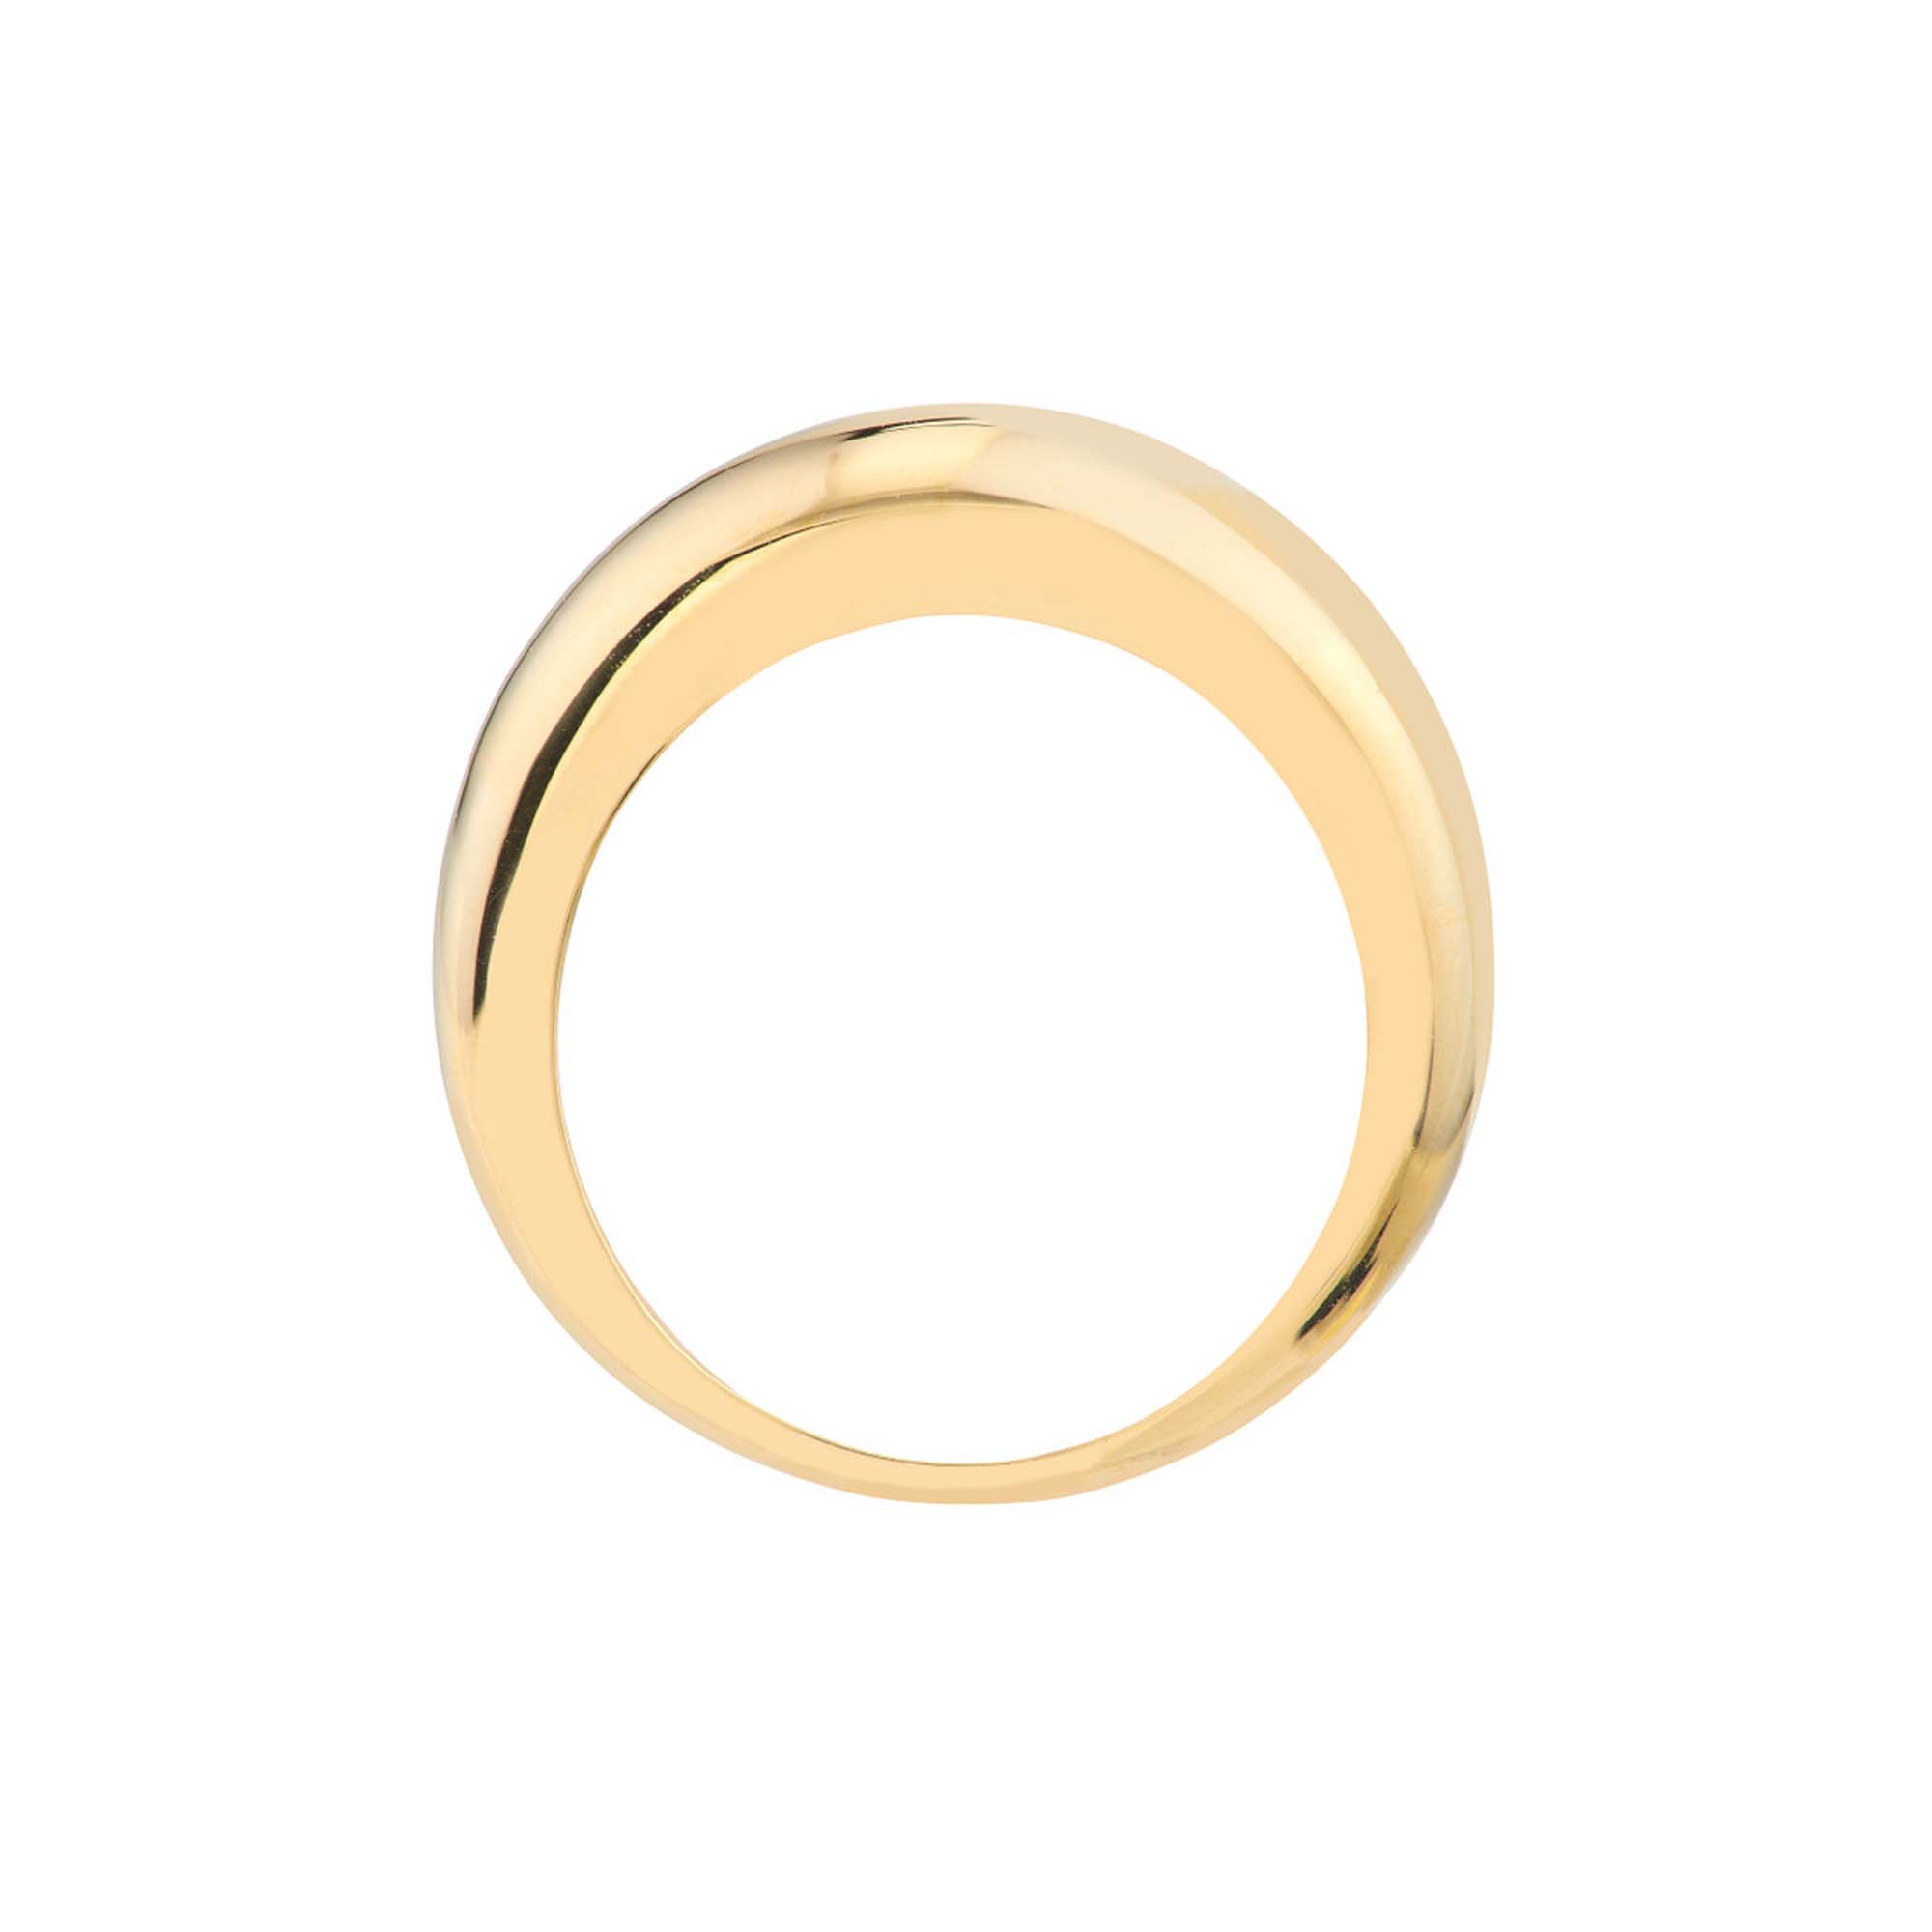 Leonna 14K Gold Domed Ring